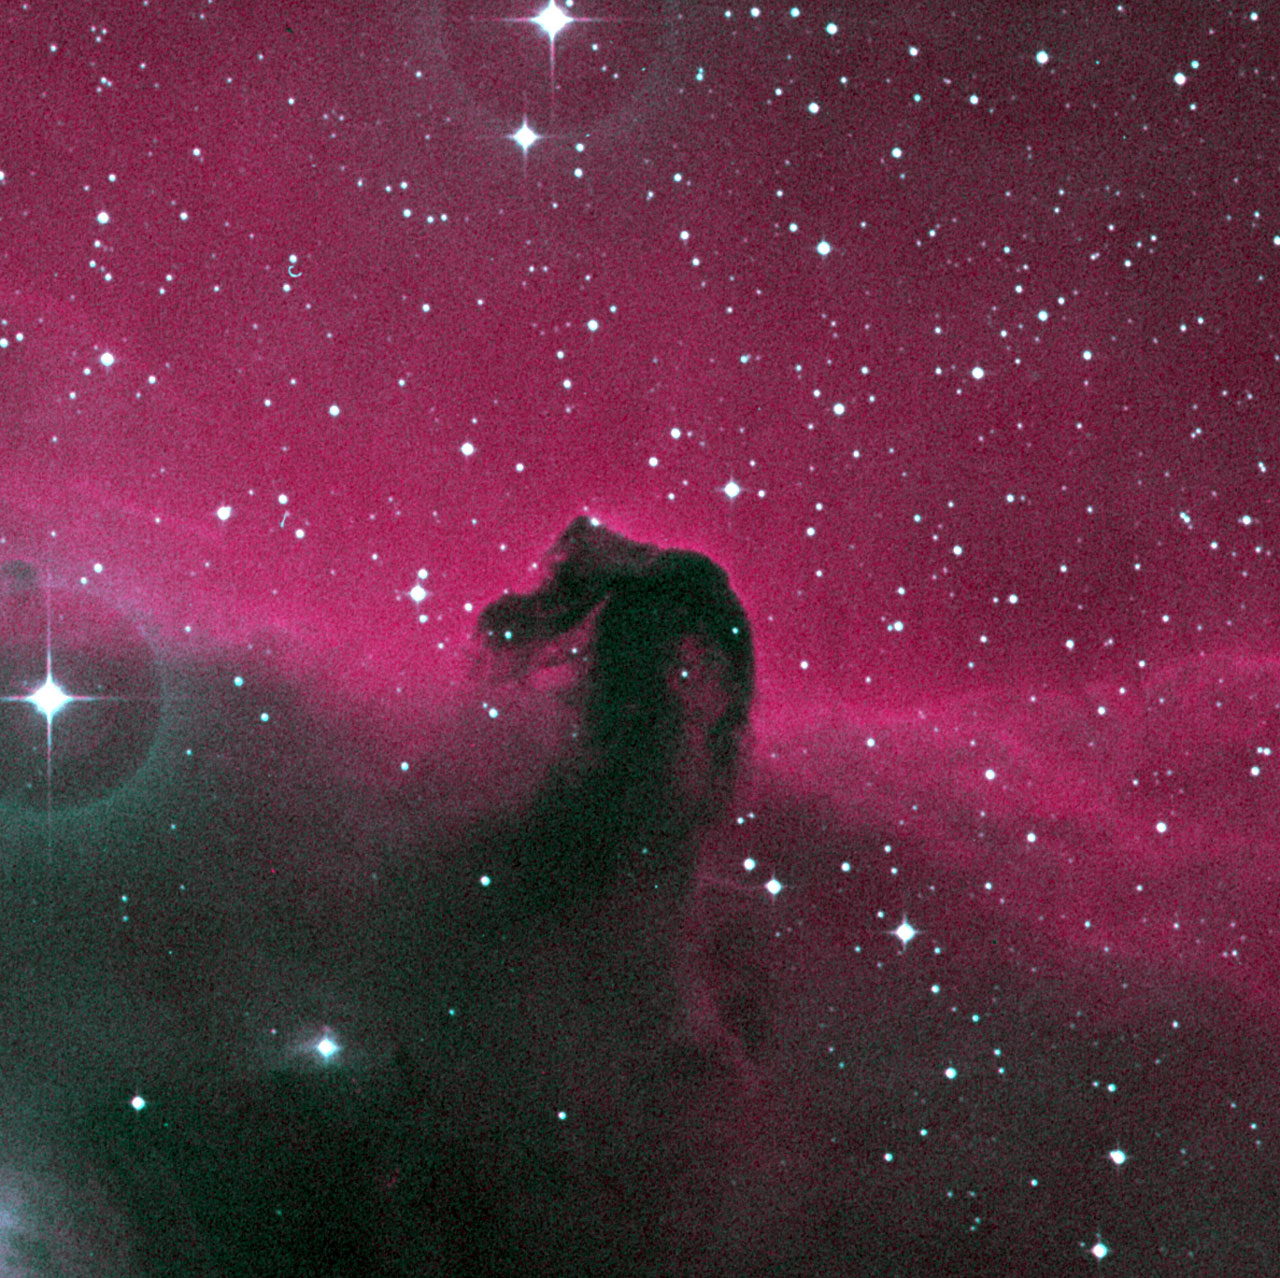 Horsehead Nebula Information